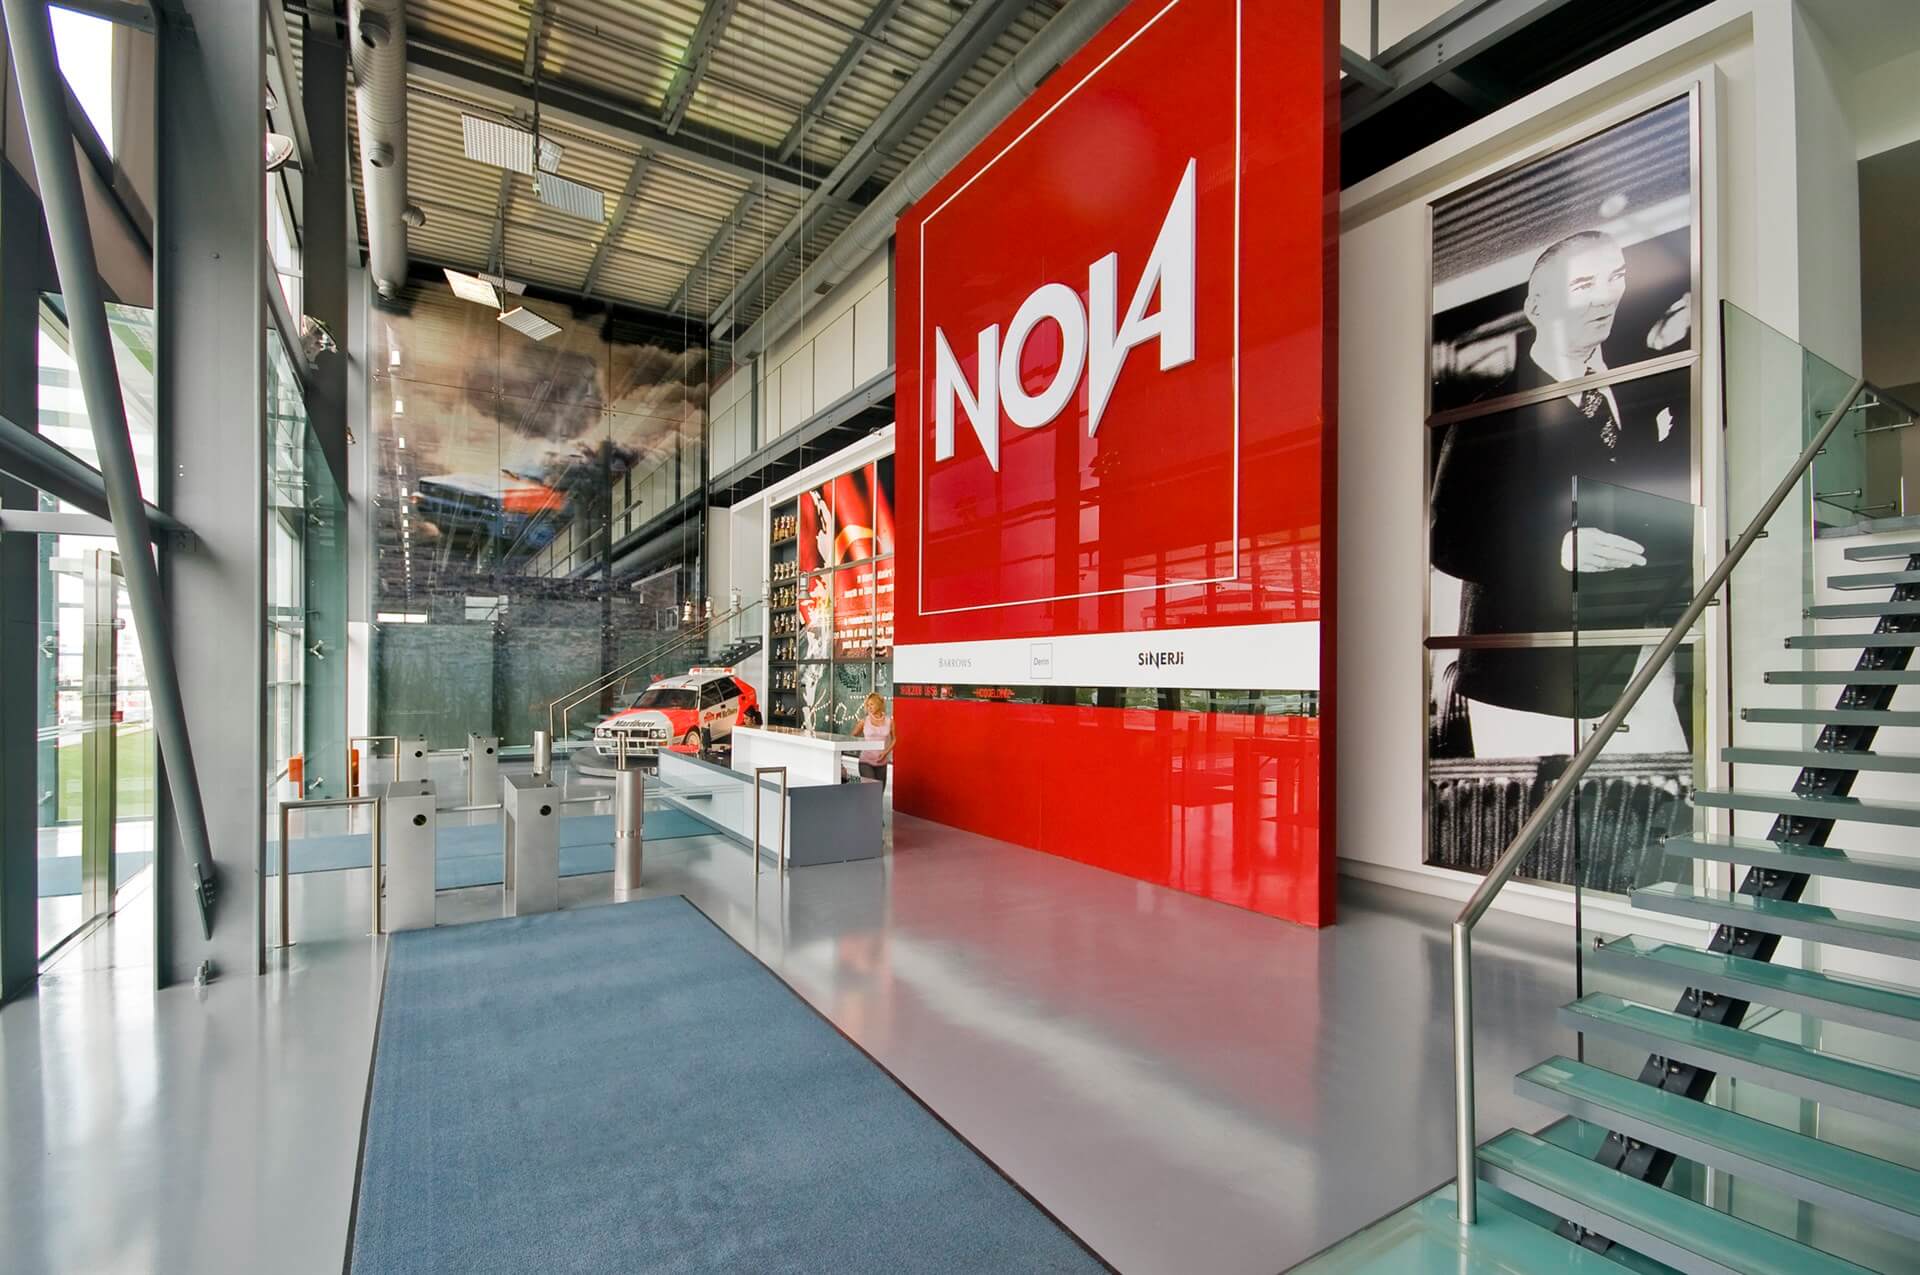 Nova Reklam Administrative and Production Building